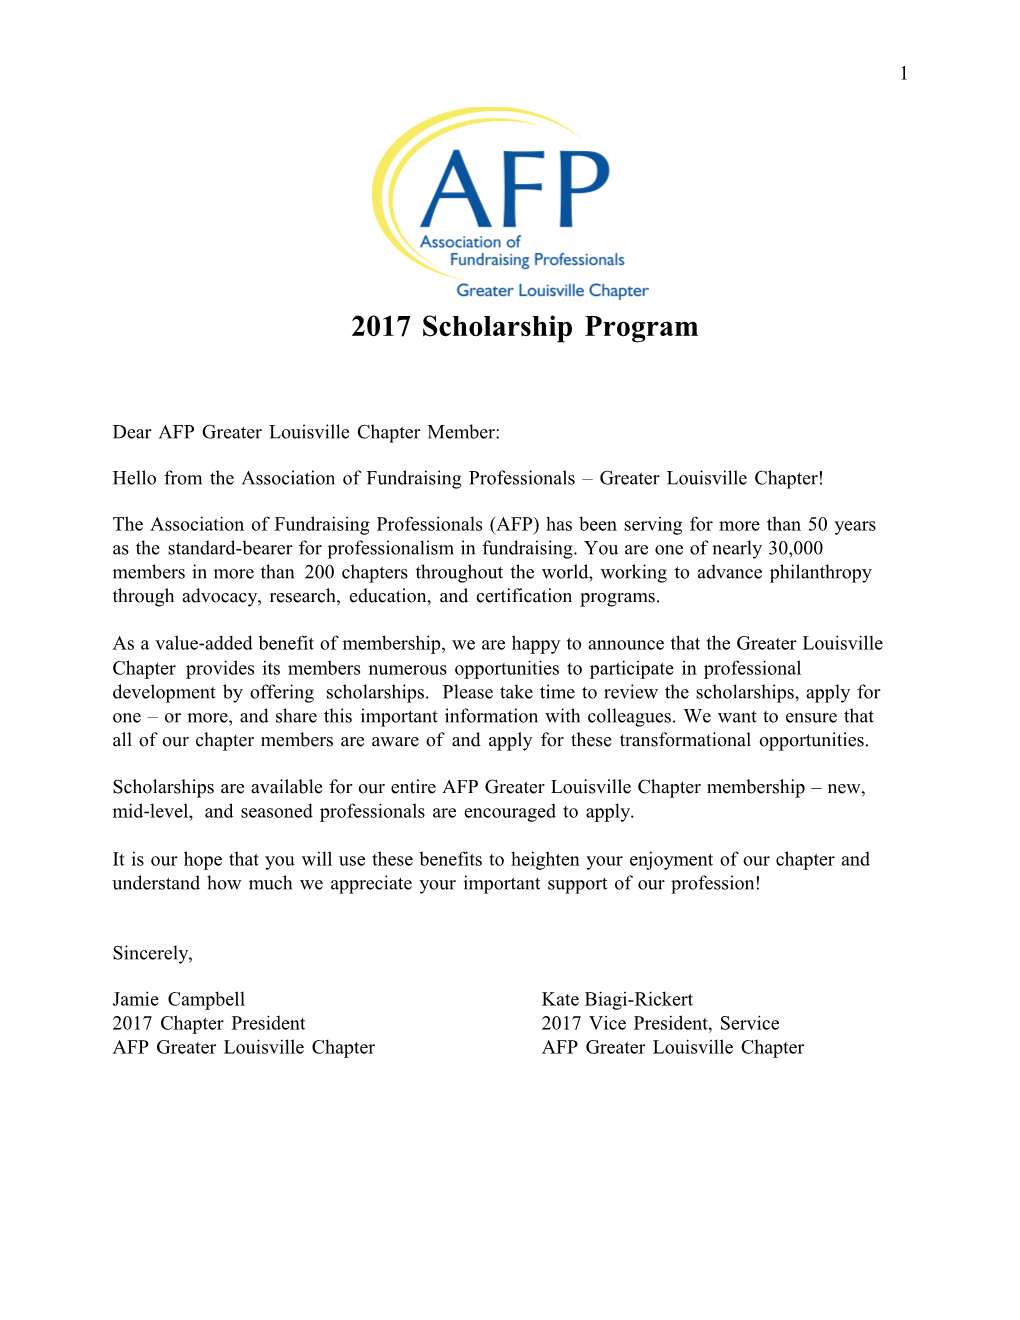 2017 Scholarship Program